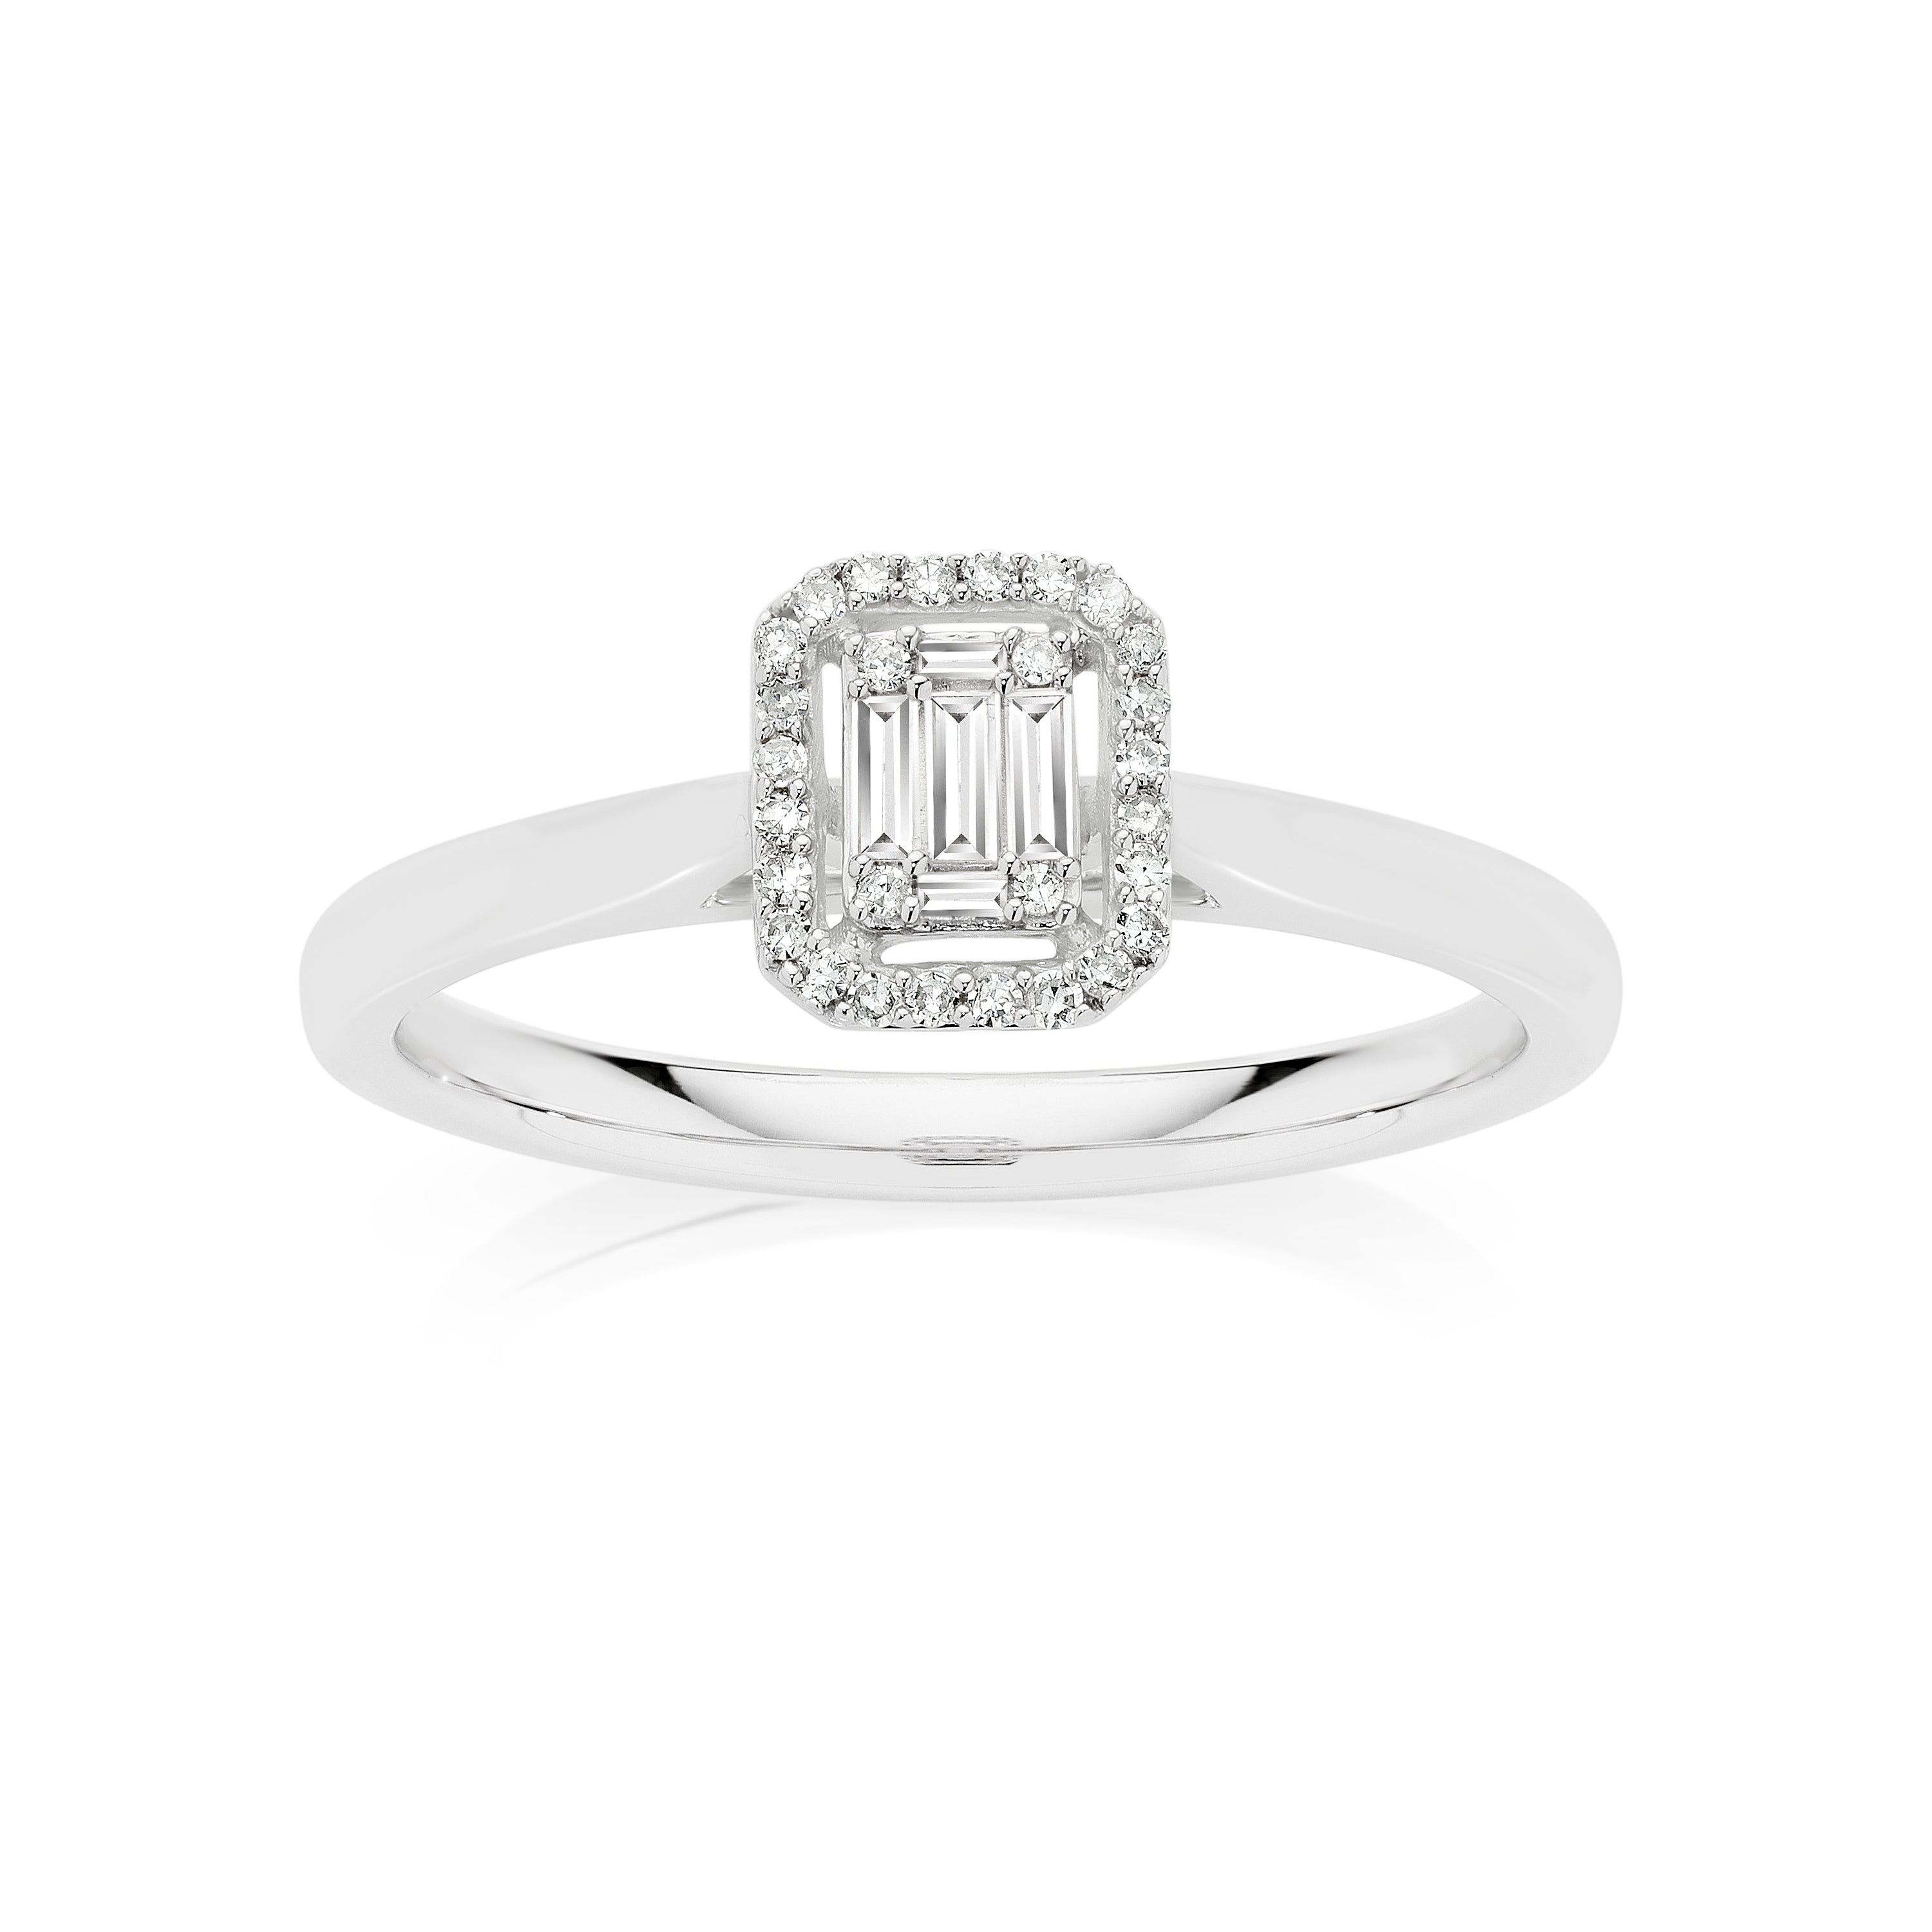 9ct 0.18ct diamond emerald cut ring